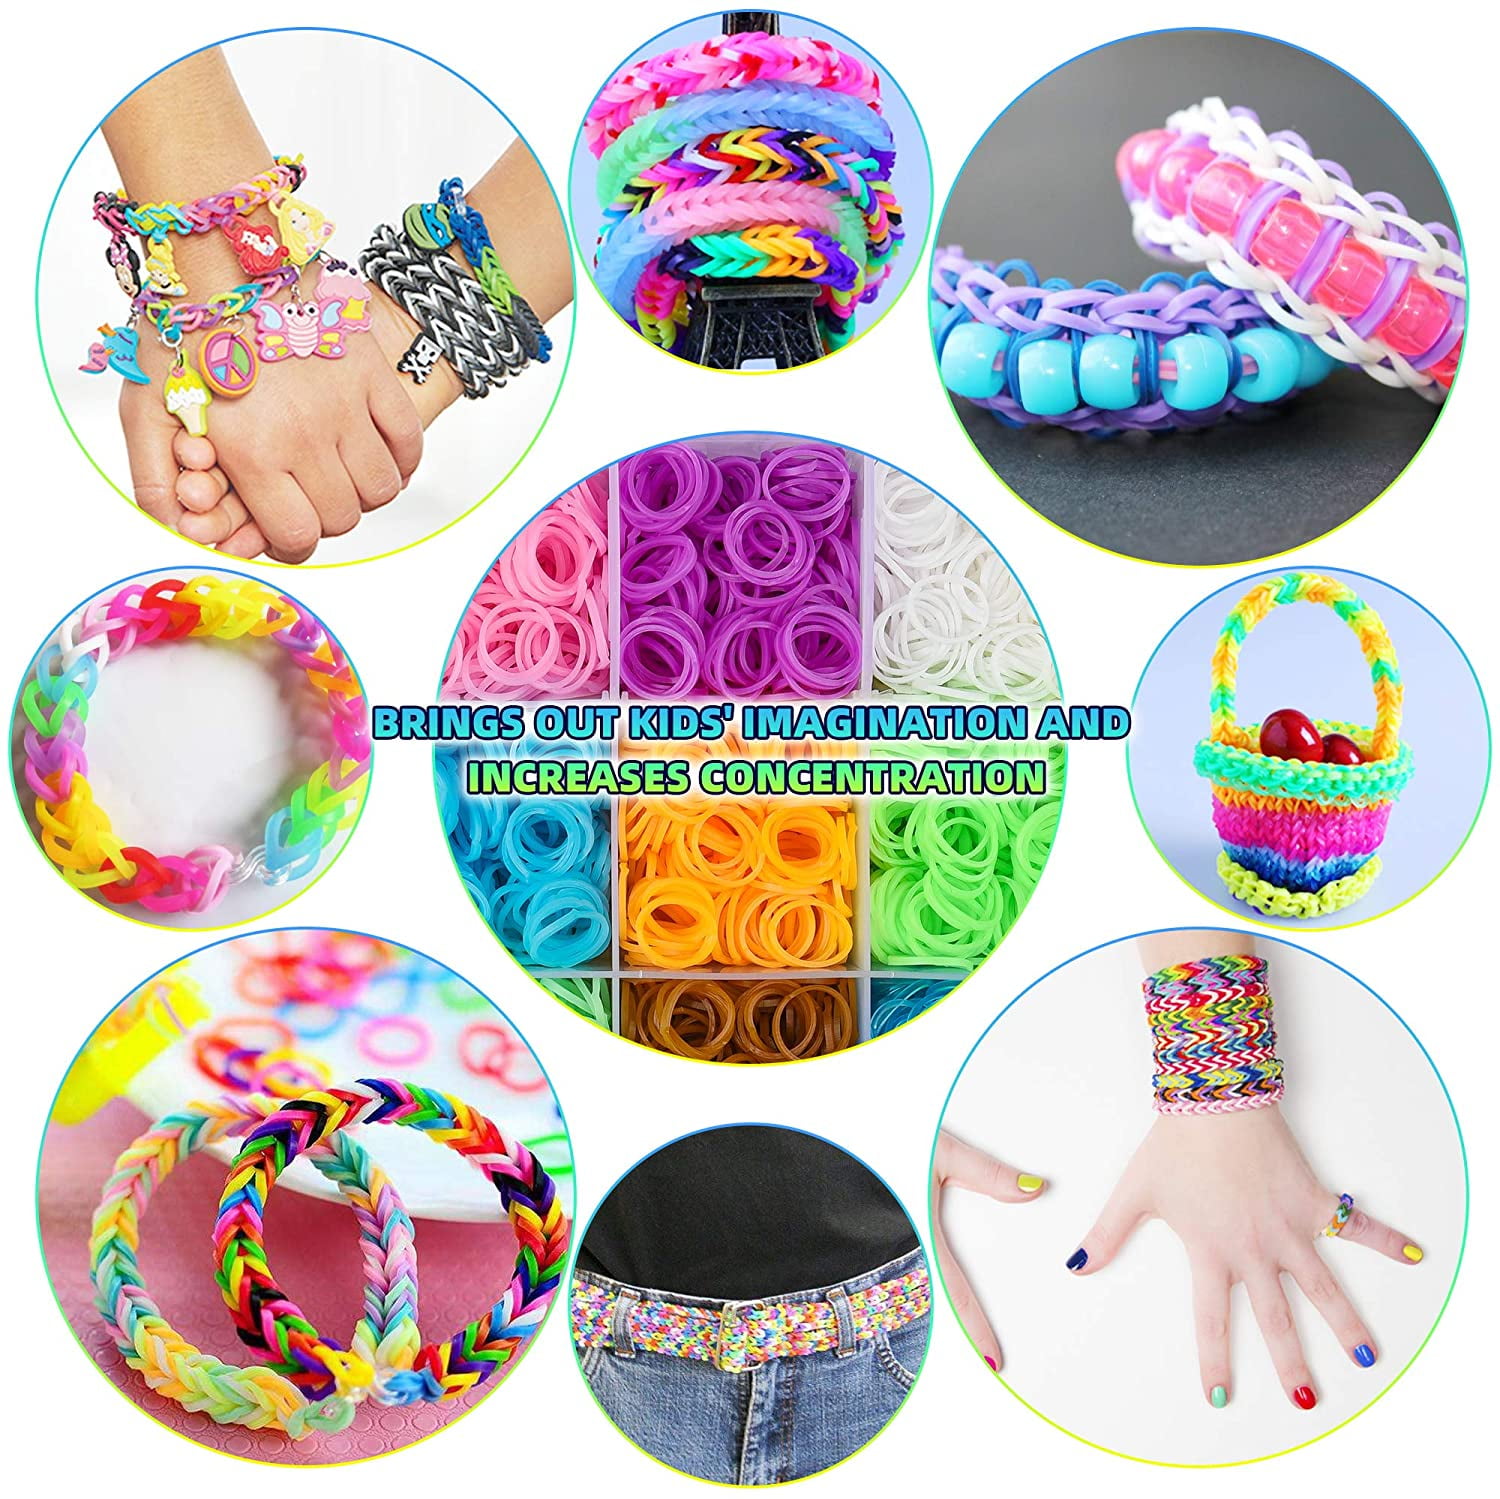 Koralakiri 5000+ Rubber Band Bracelet Making Kit, Loom Rubber Bands Refill  Set, Friendship Bracelets Making Kit Gifts for Girls Ages 8-12 